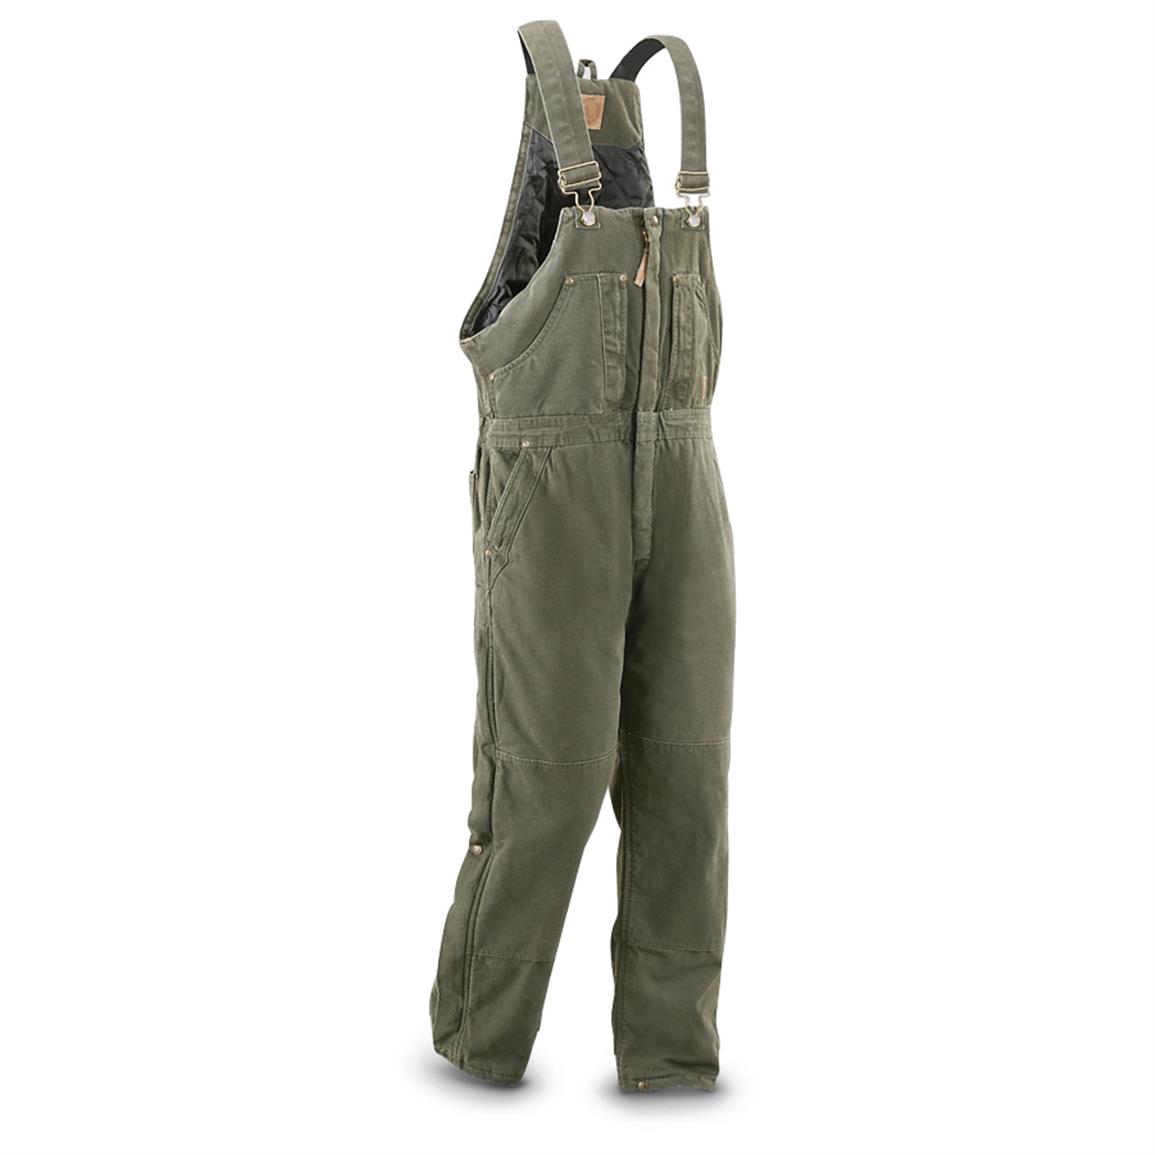 Berne Original Washed Insulated Bib Overalls - 614591, Insulated Pants, Overalls & Coveralls at 